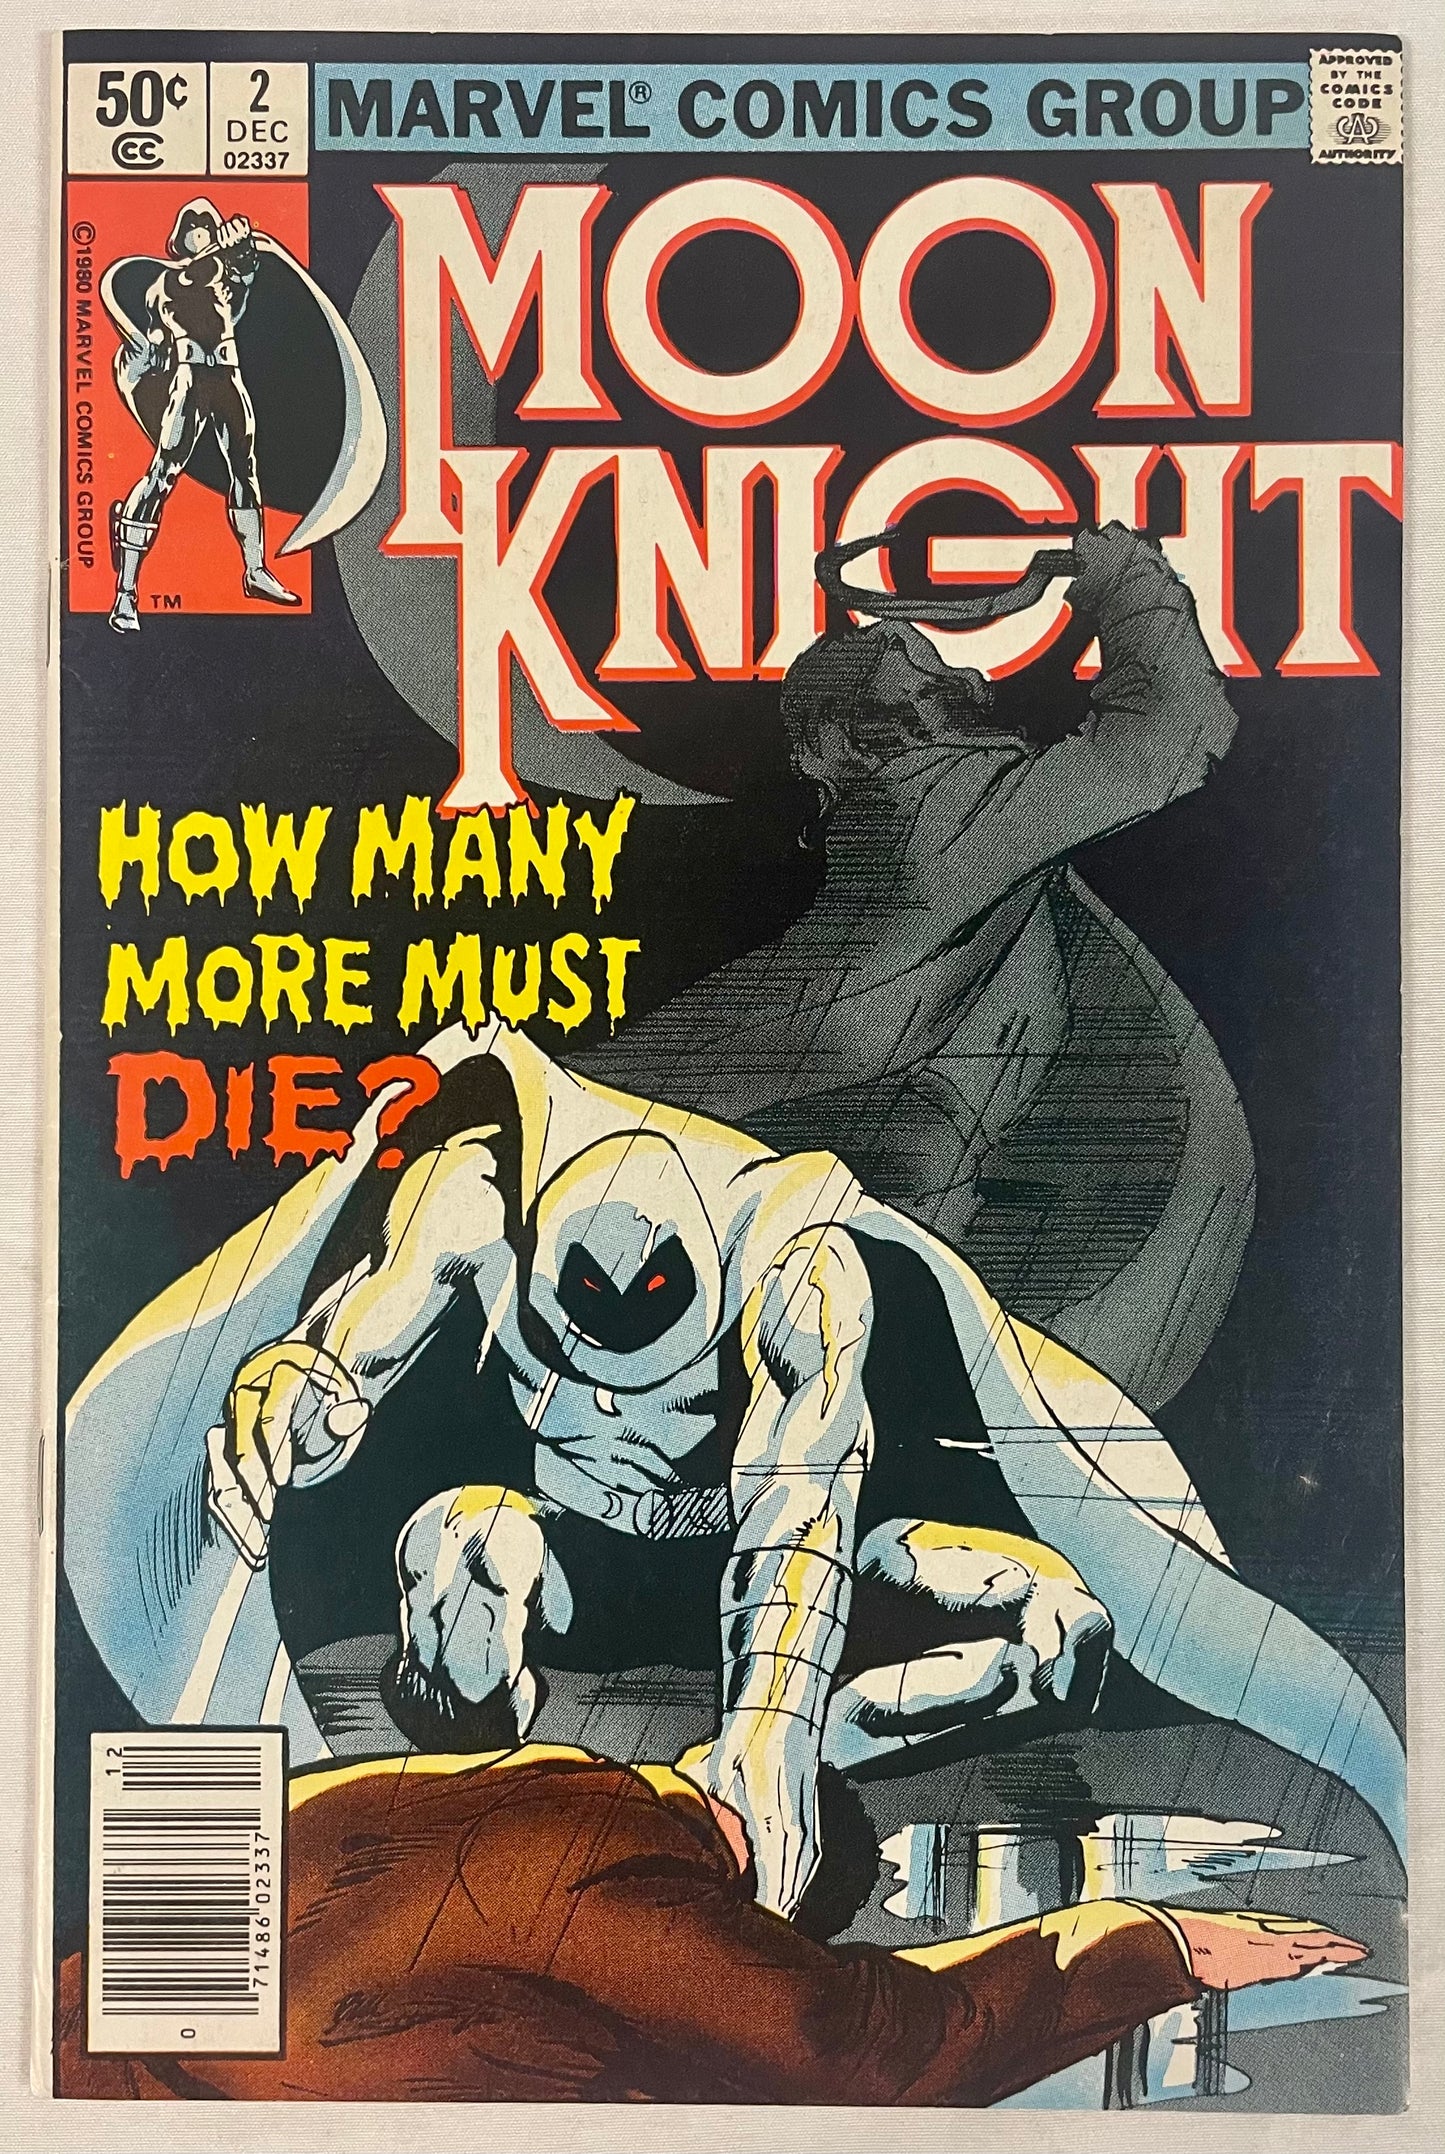 Marvel Comics Moon Knight #2